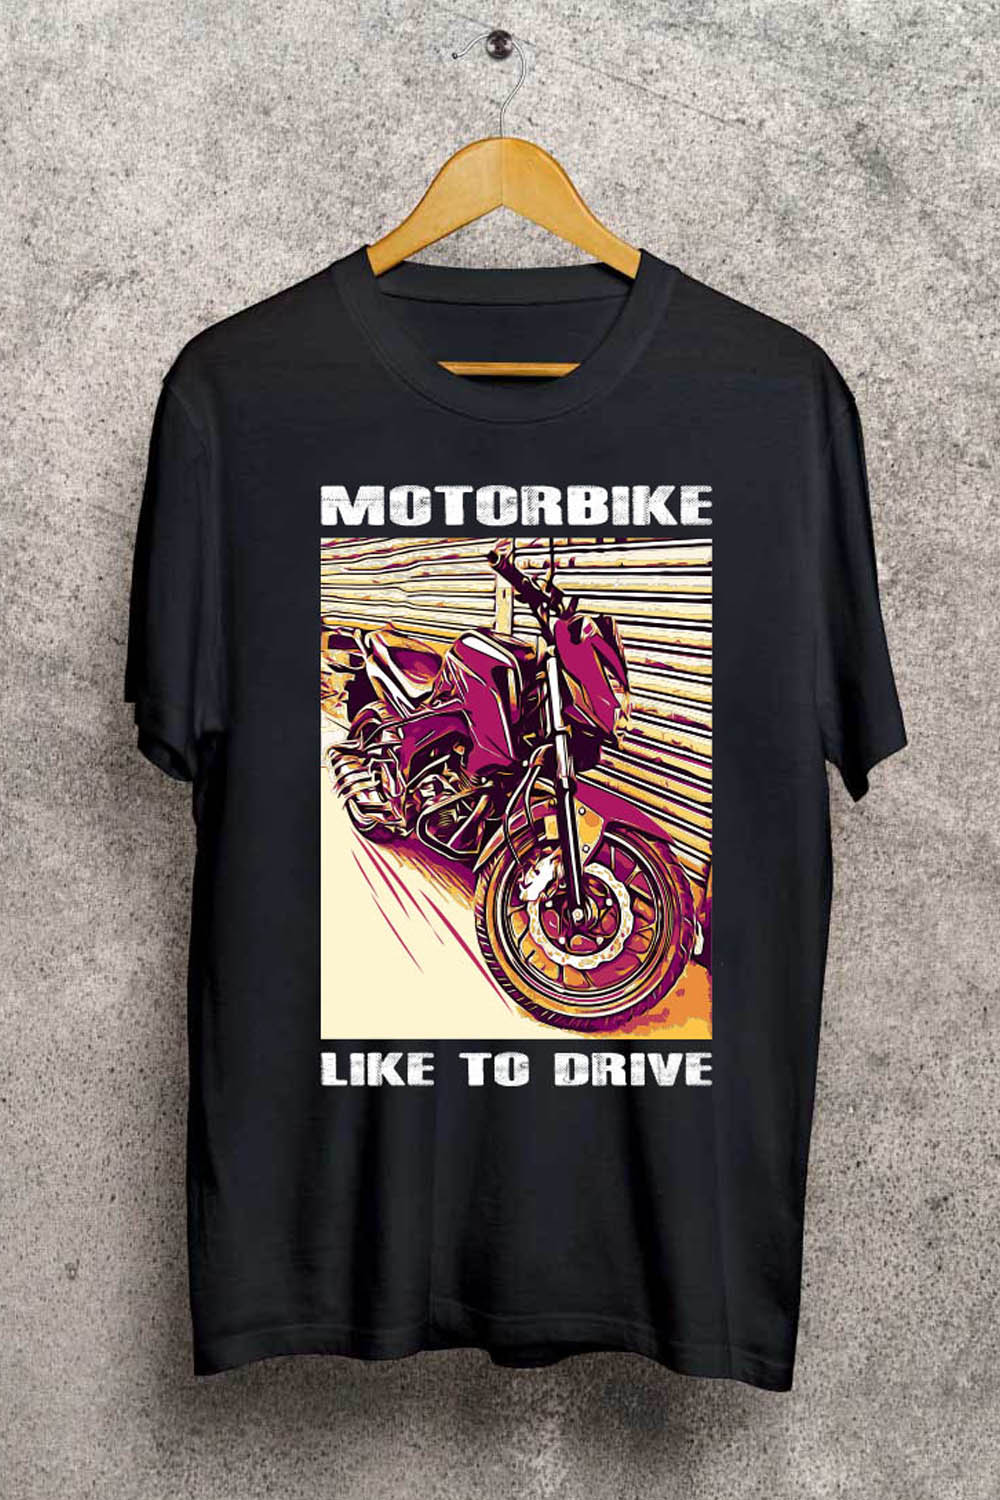 Motorbike / Motorcycle T-shirt Design pinterest preview image.